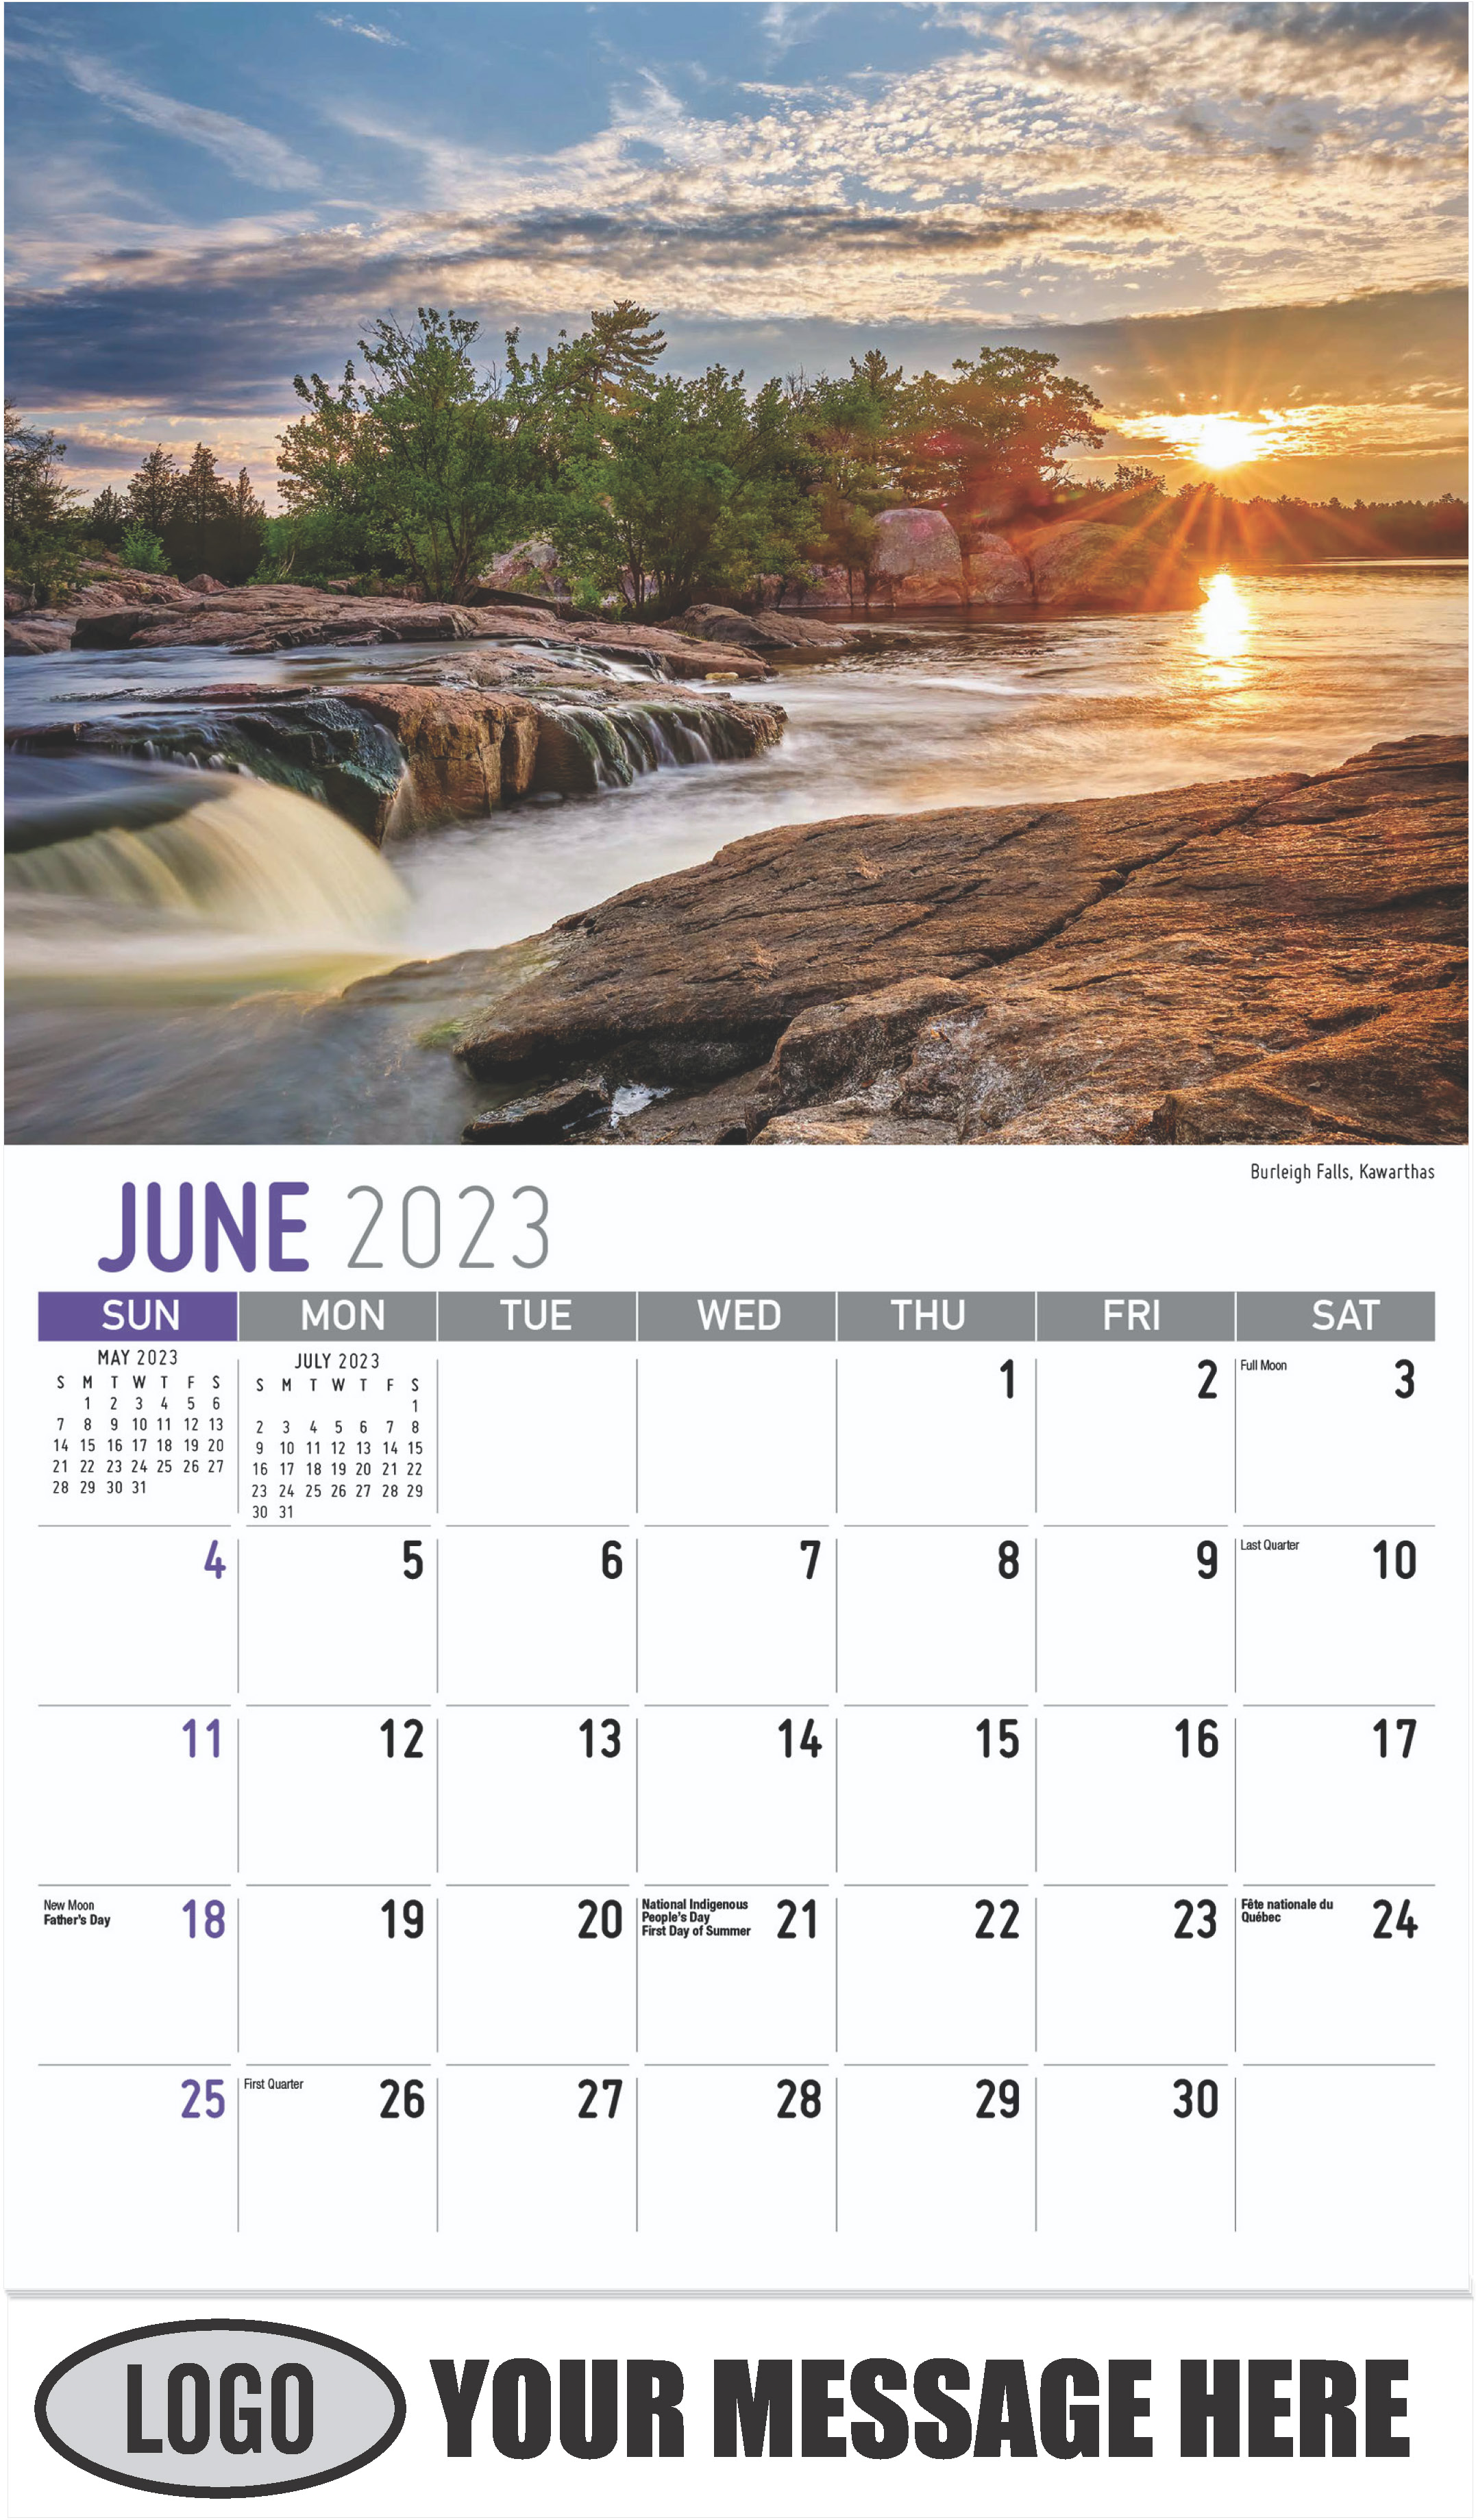 Burleigh Falls, Kawarthas - June - Scenes of Ontario 2023 Promotional Calendar